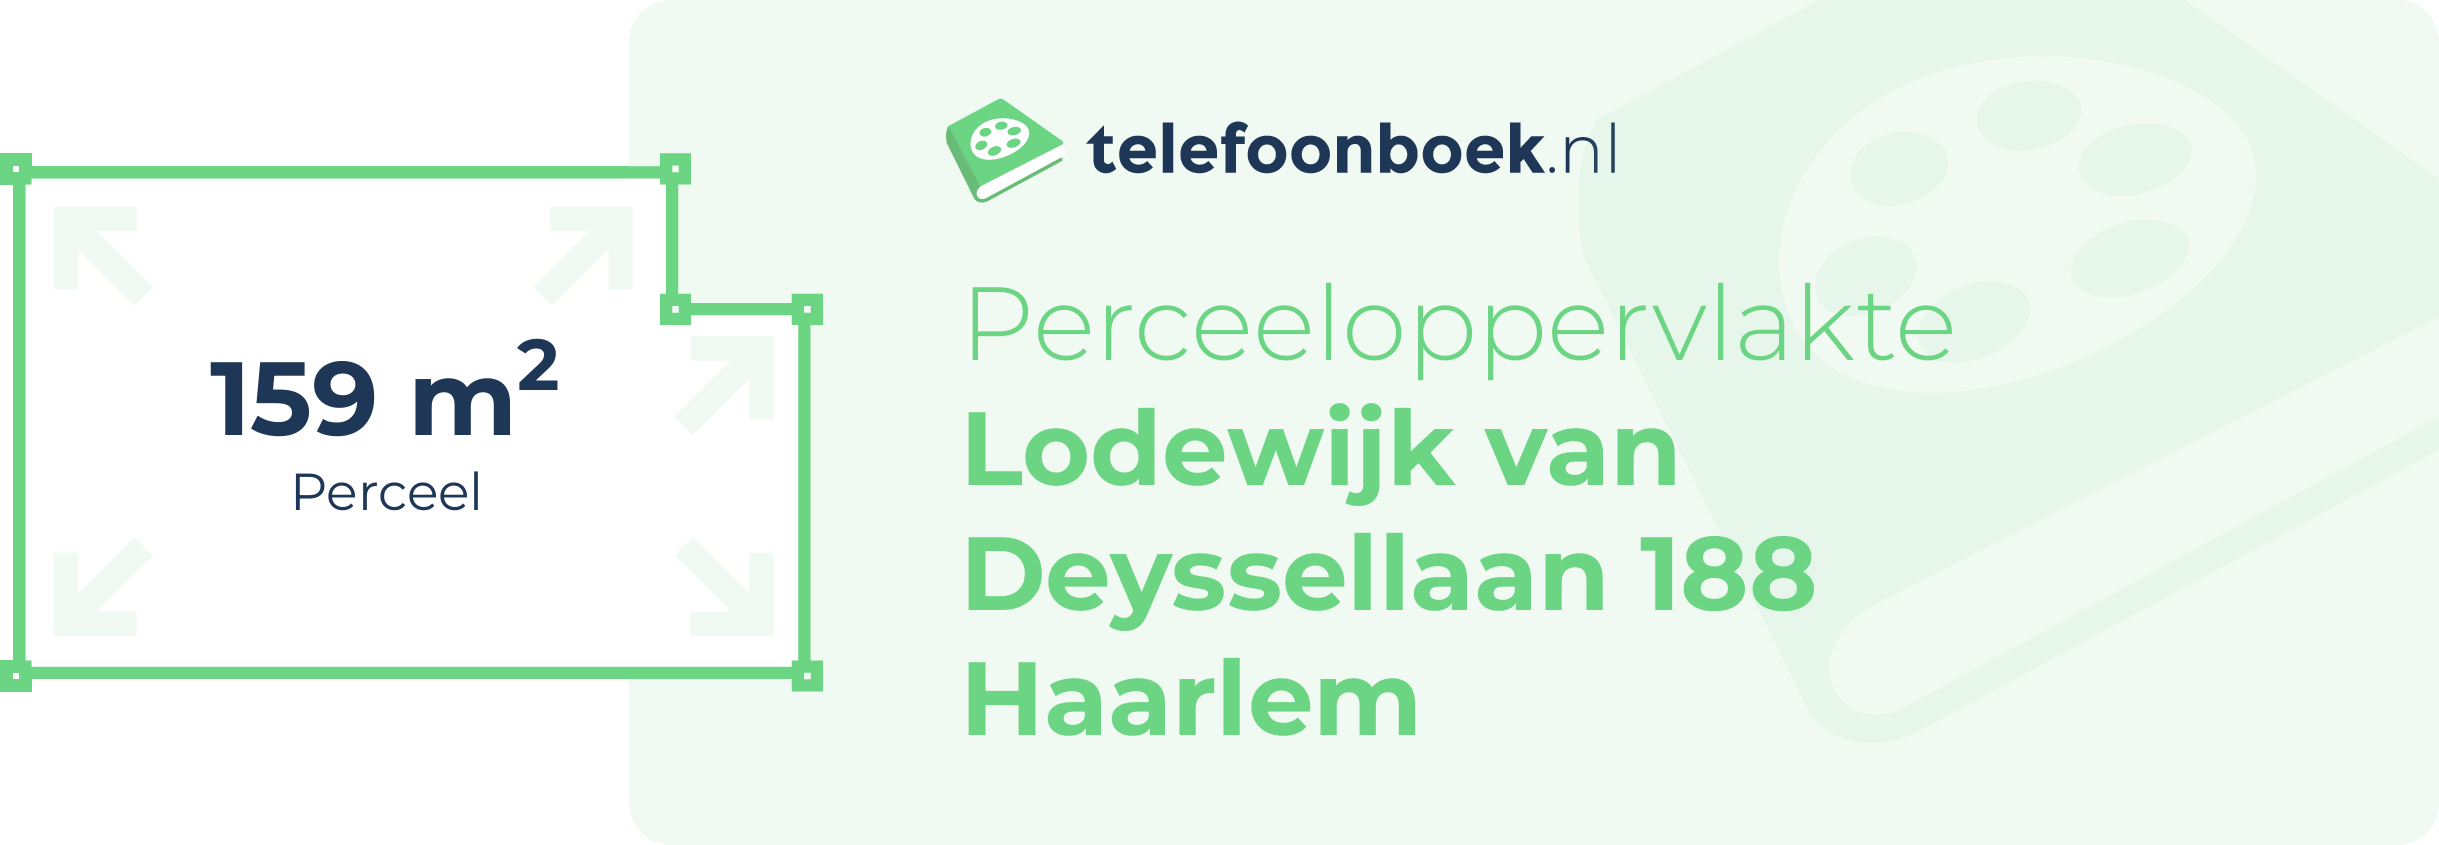 Perceeloppervlakte Lodewijk Van Deyssellaan 188 Haarlem